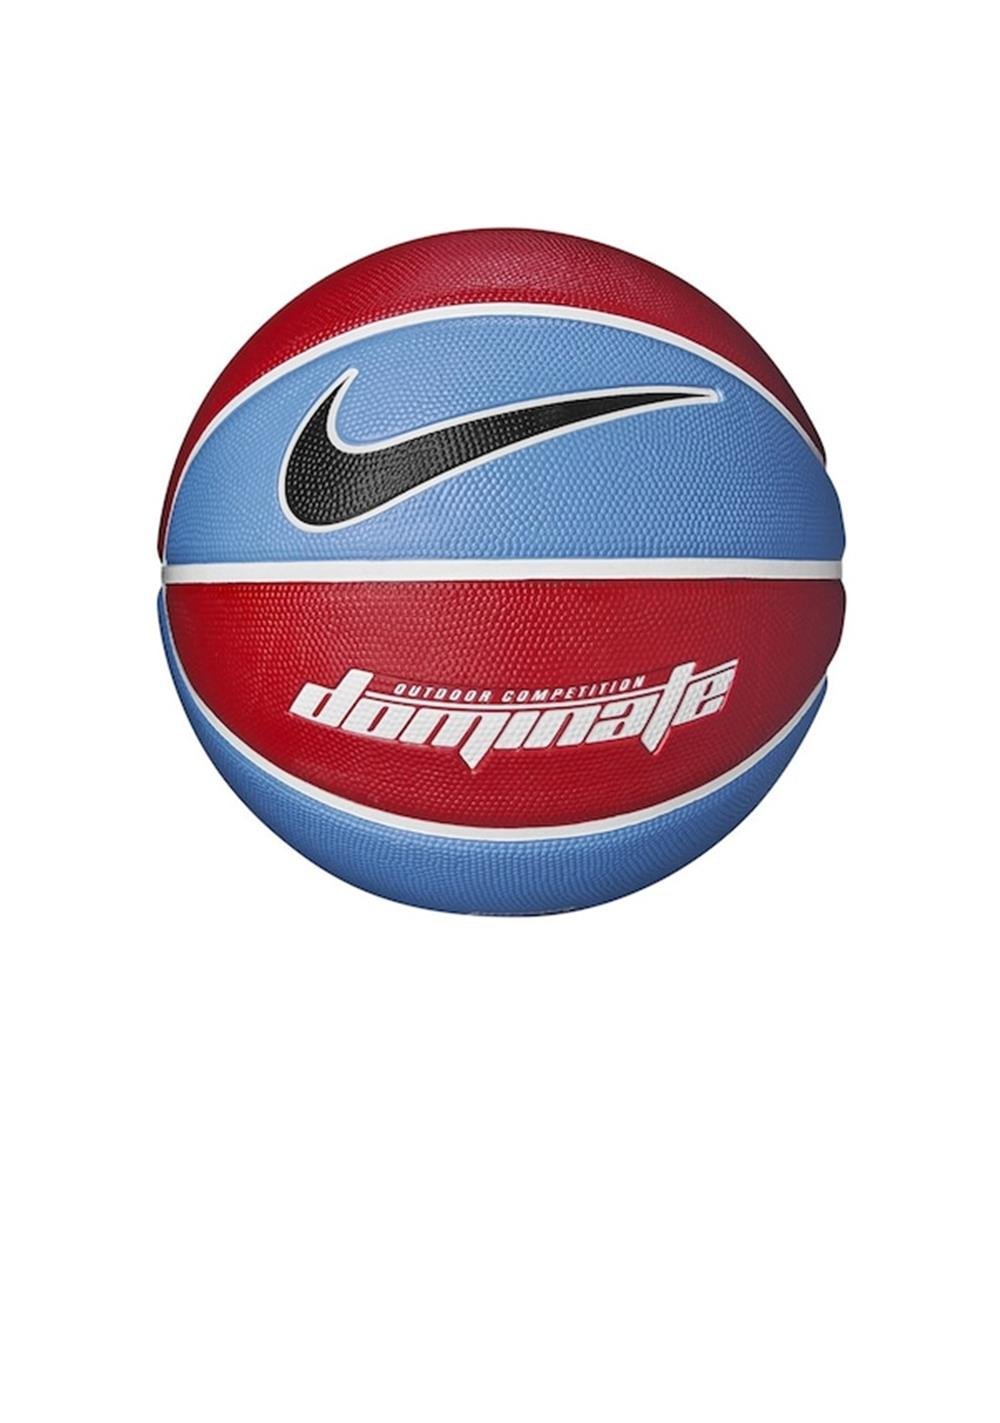 Nike Dominate 8p Basketbol Topu N.000.1165 473 Renk 473